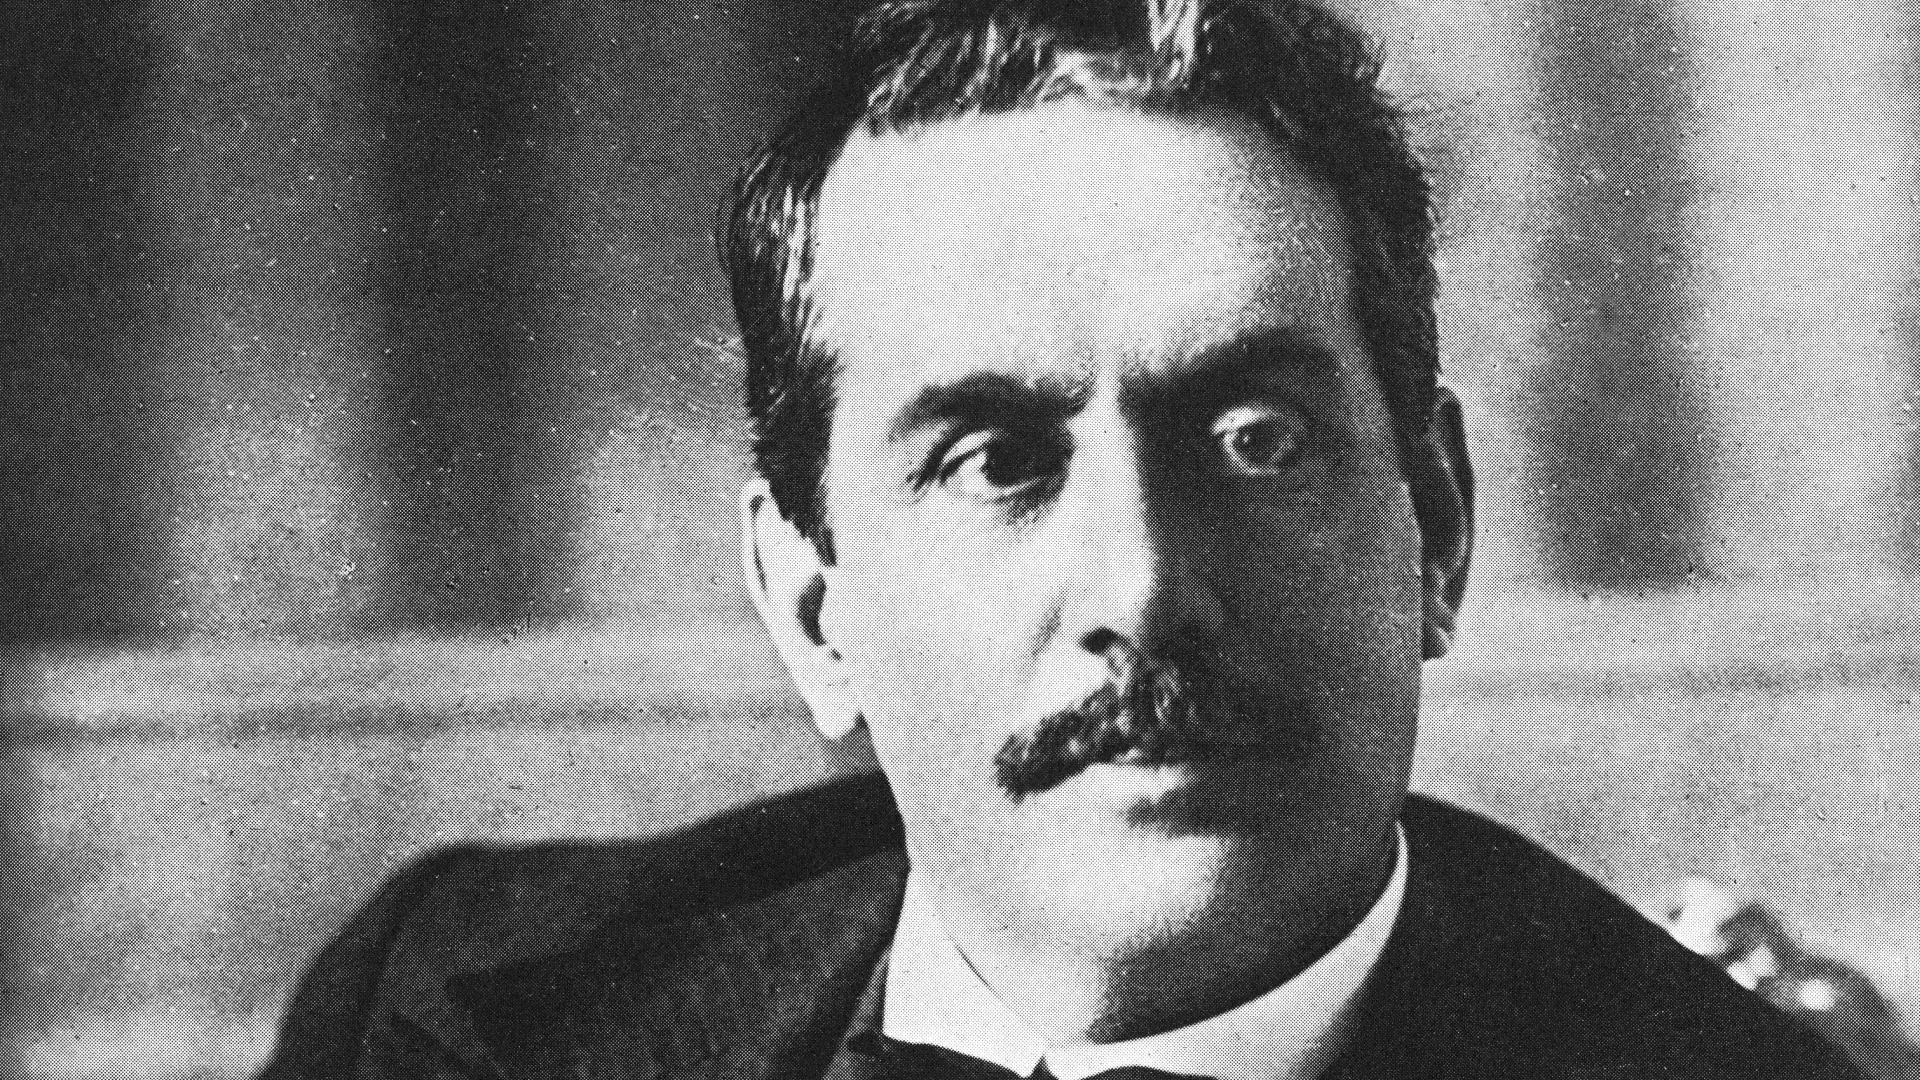 Centenary of Puccini's death